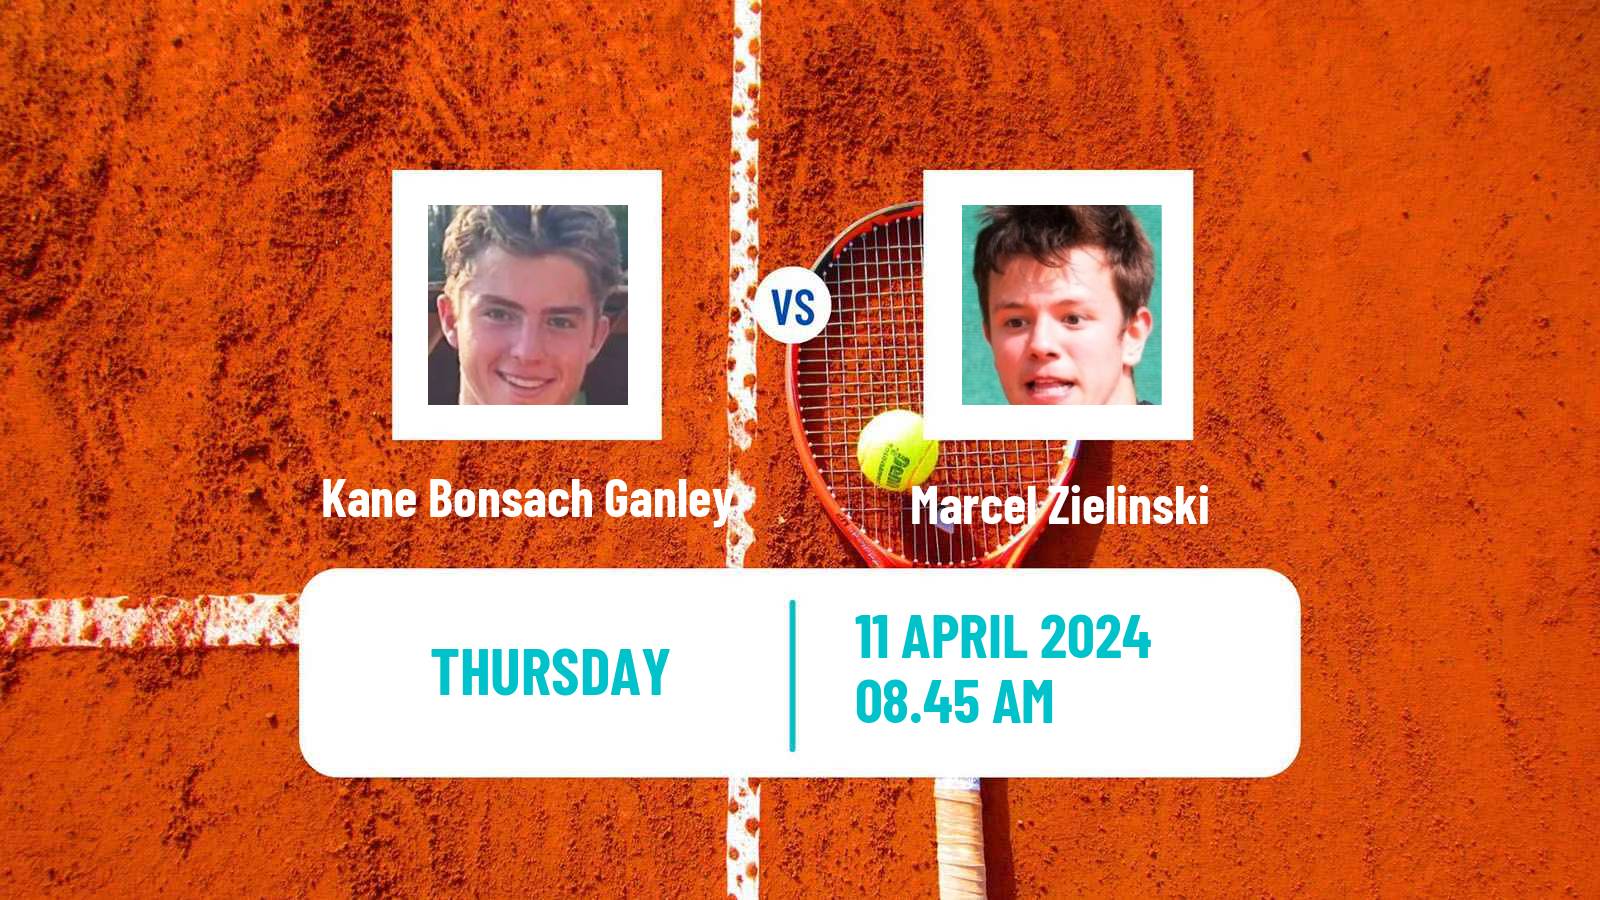 Tennis ITF M15 Telde Men Kane Bonsach Ganley - Marcel Zielinski